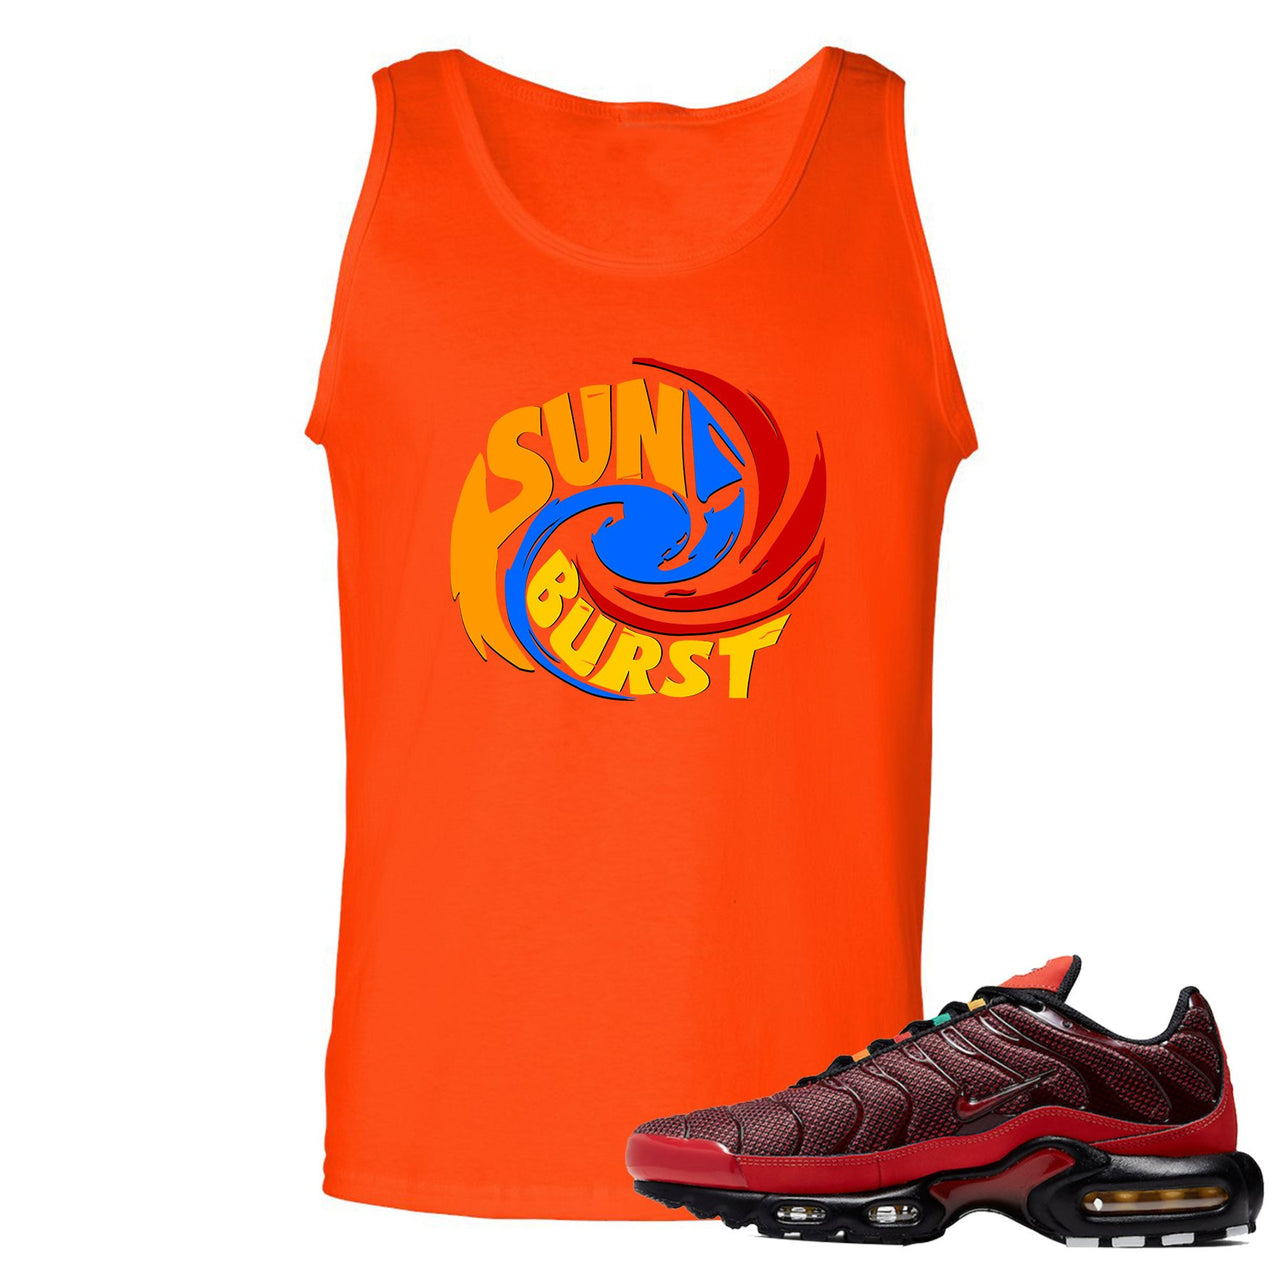 printed on the front of the air max plus sunburst sneaker matching orange tank top is the sunburst hurricane logo